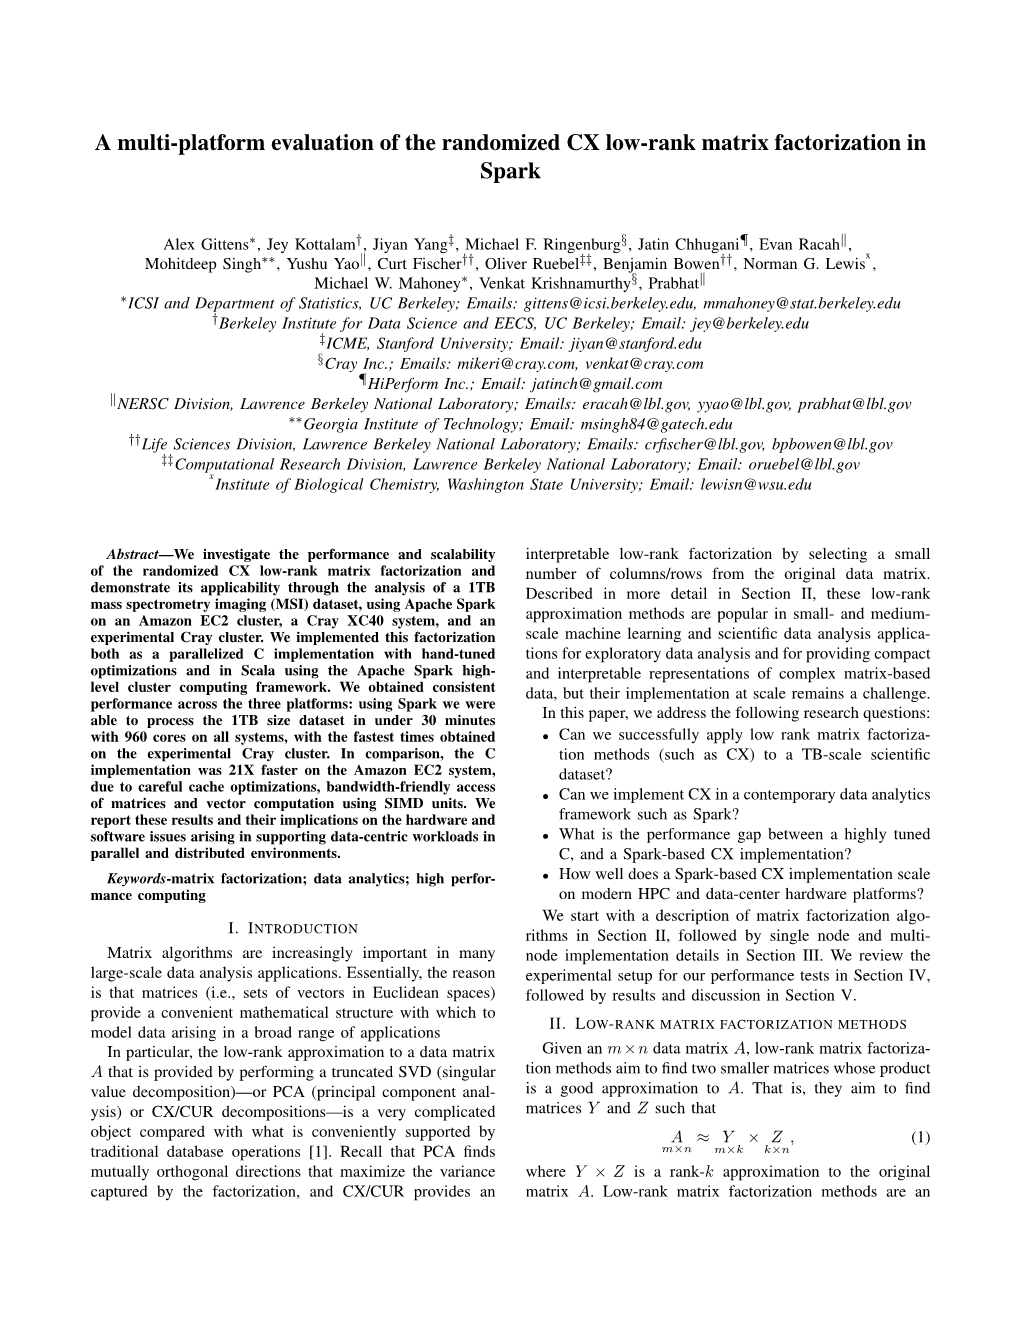 A Multi-Platform Evaluation of the Randomized CX Low-Rank Matrix Factorization in Spark